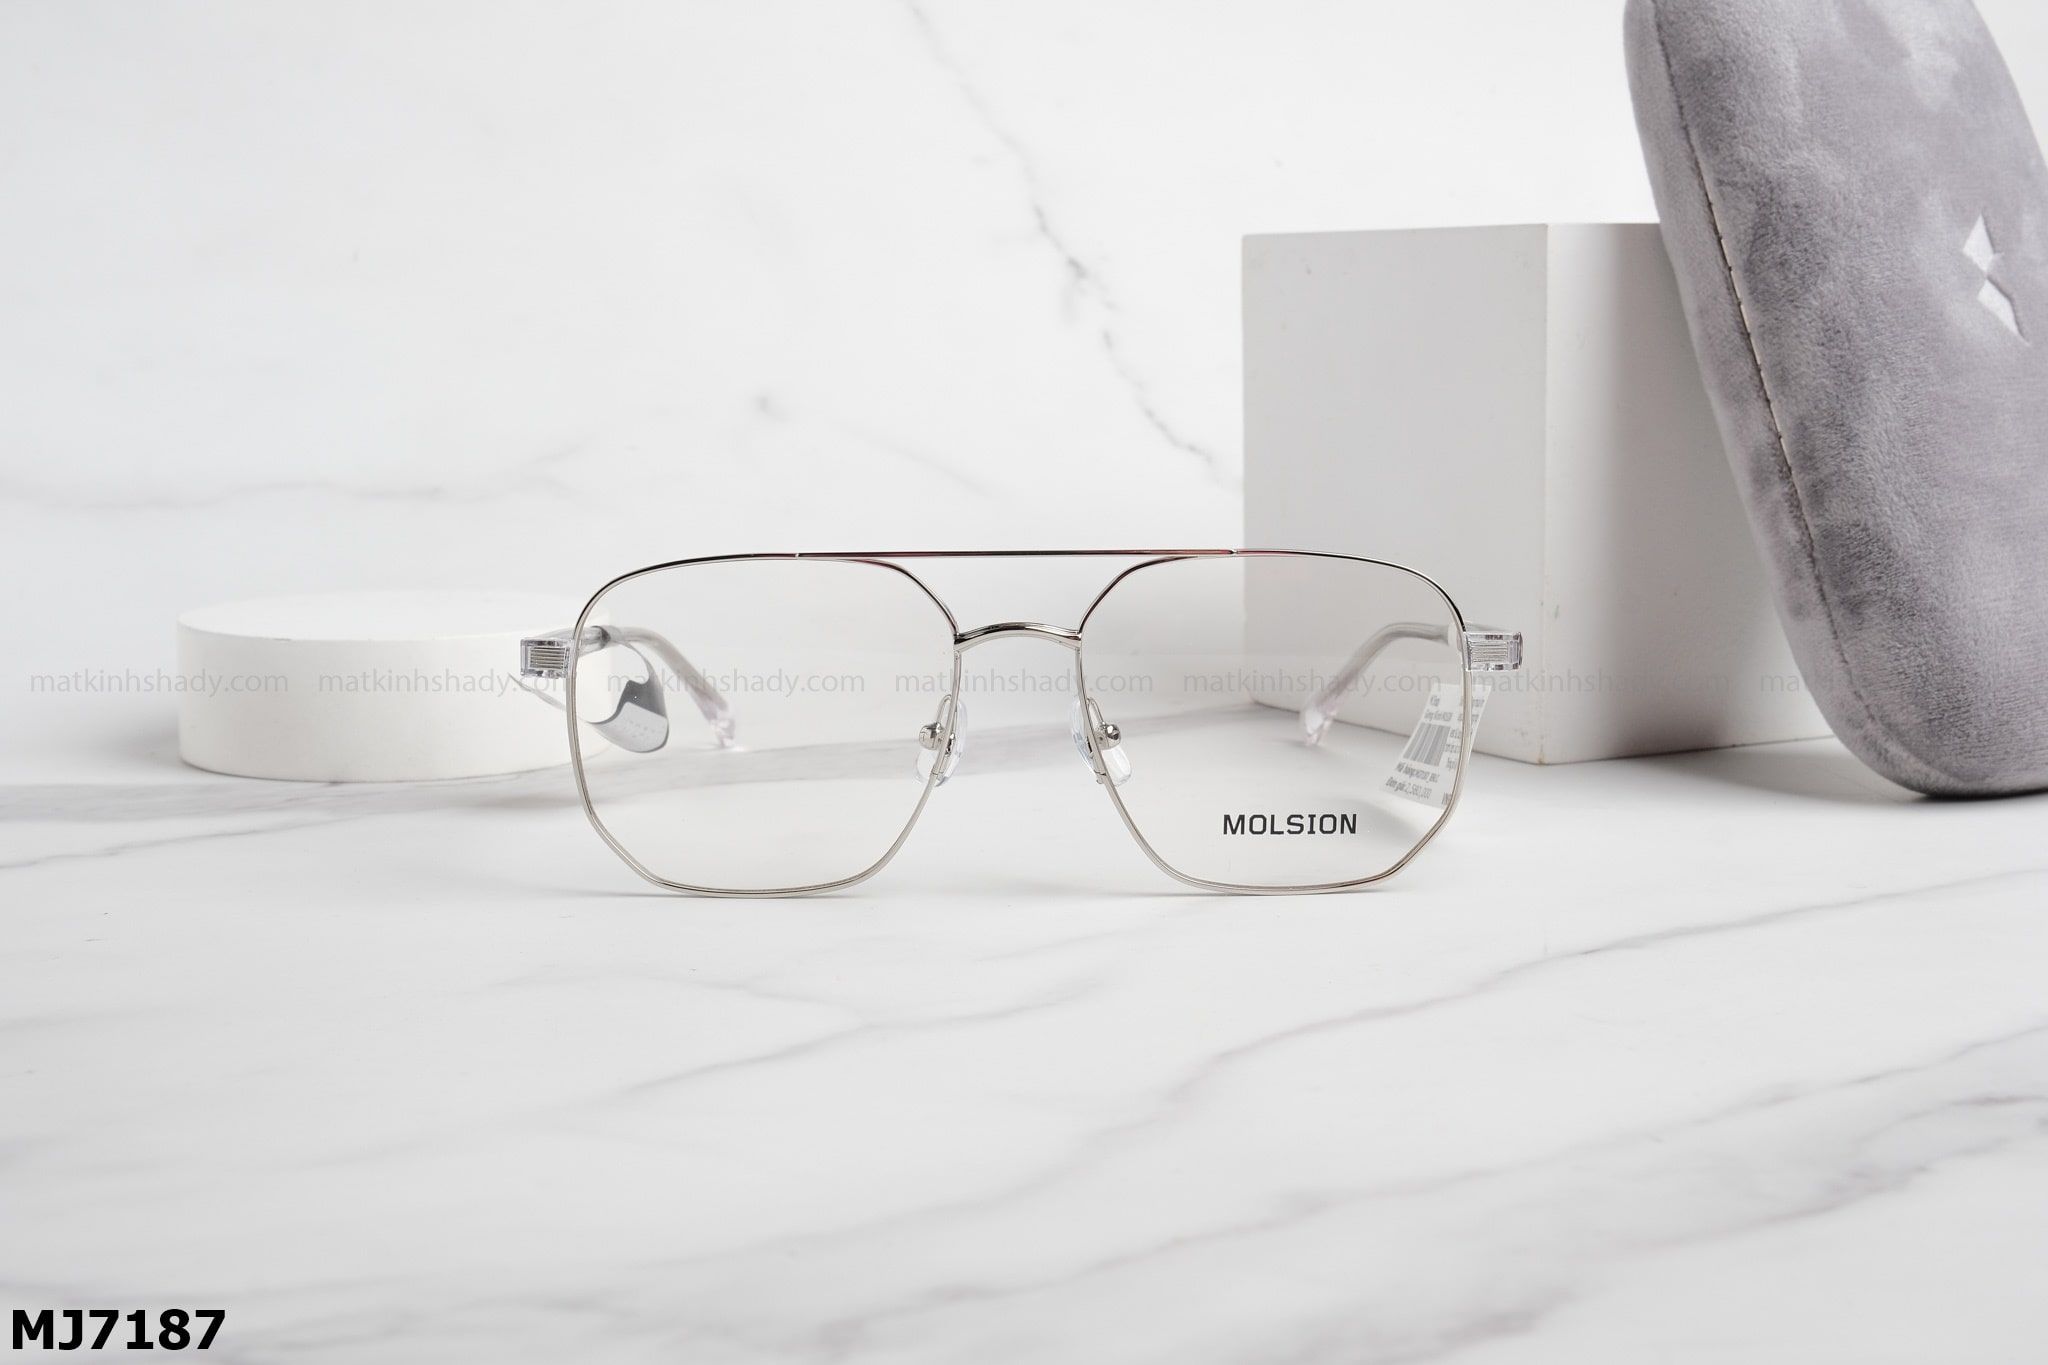  Molsion Eyewear - Glasses - MJ7187 